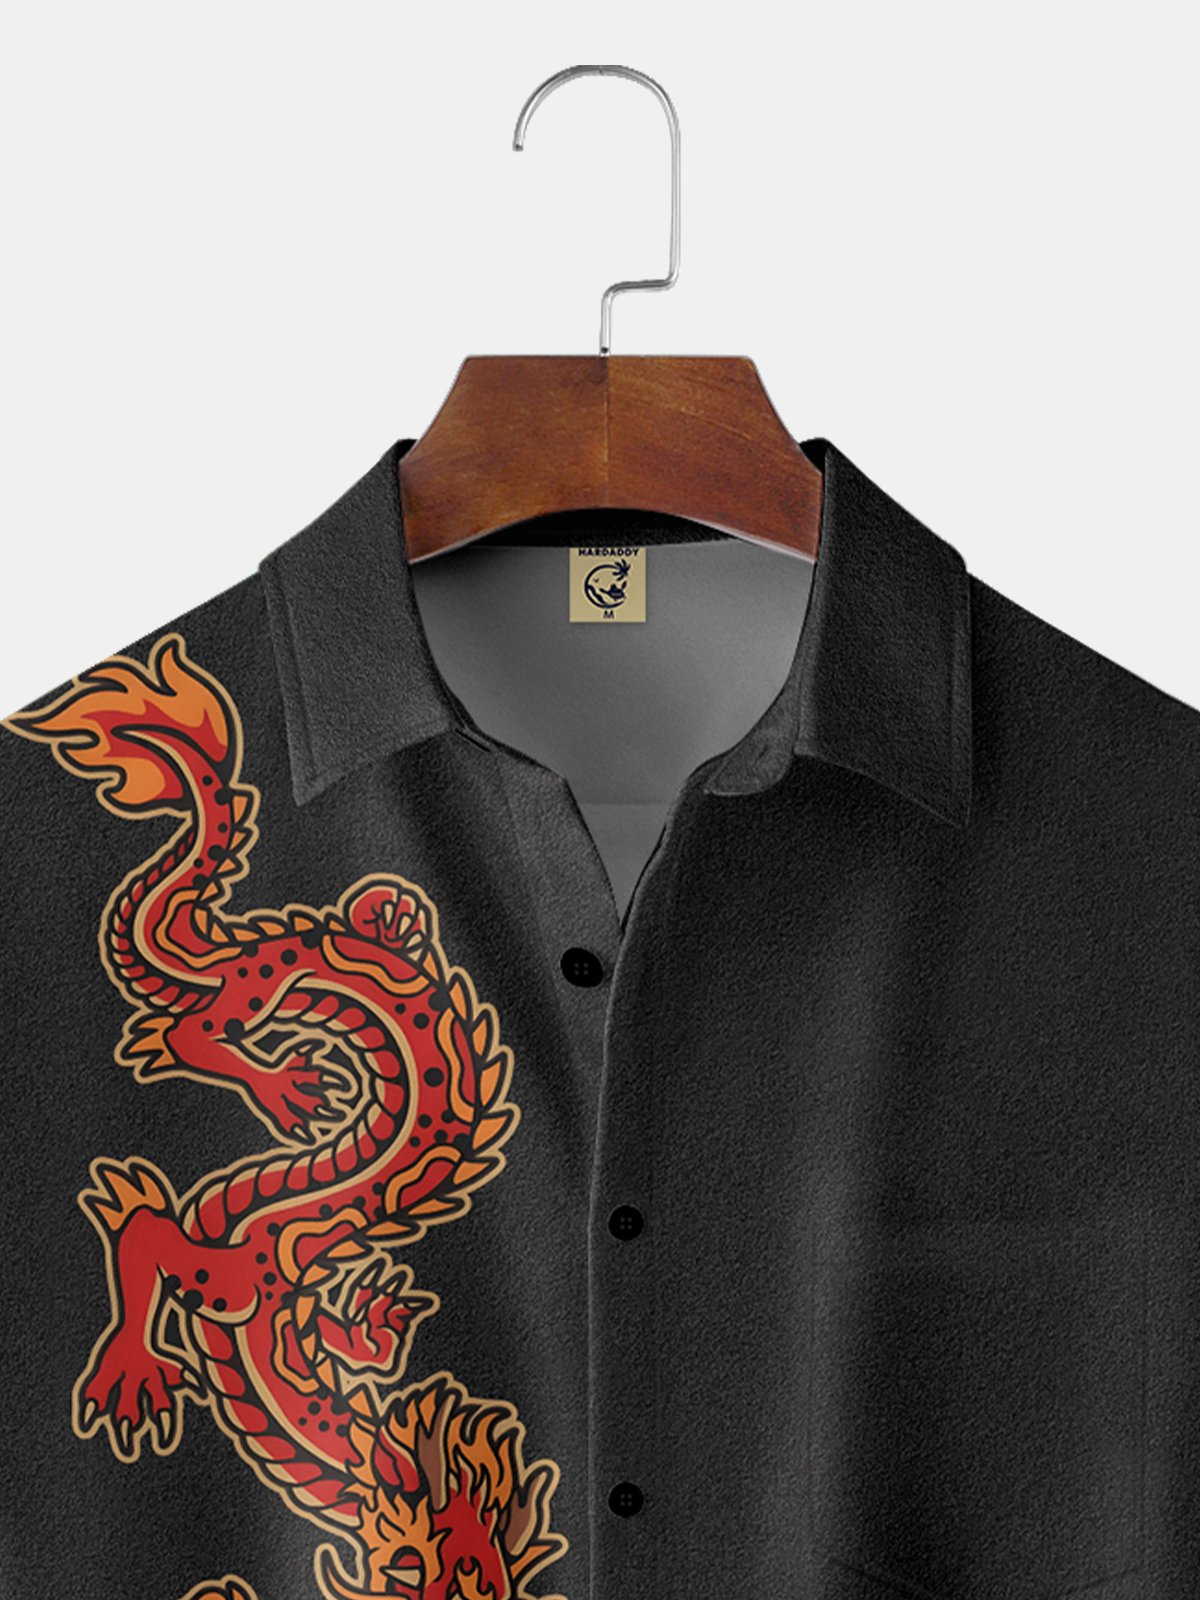 Moisture-Wicking Tropical Dragon Print Shirt